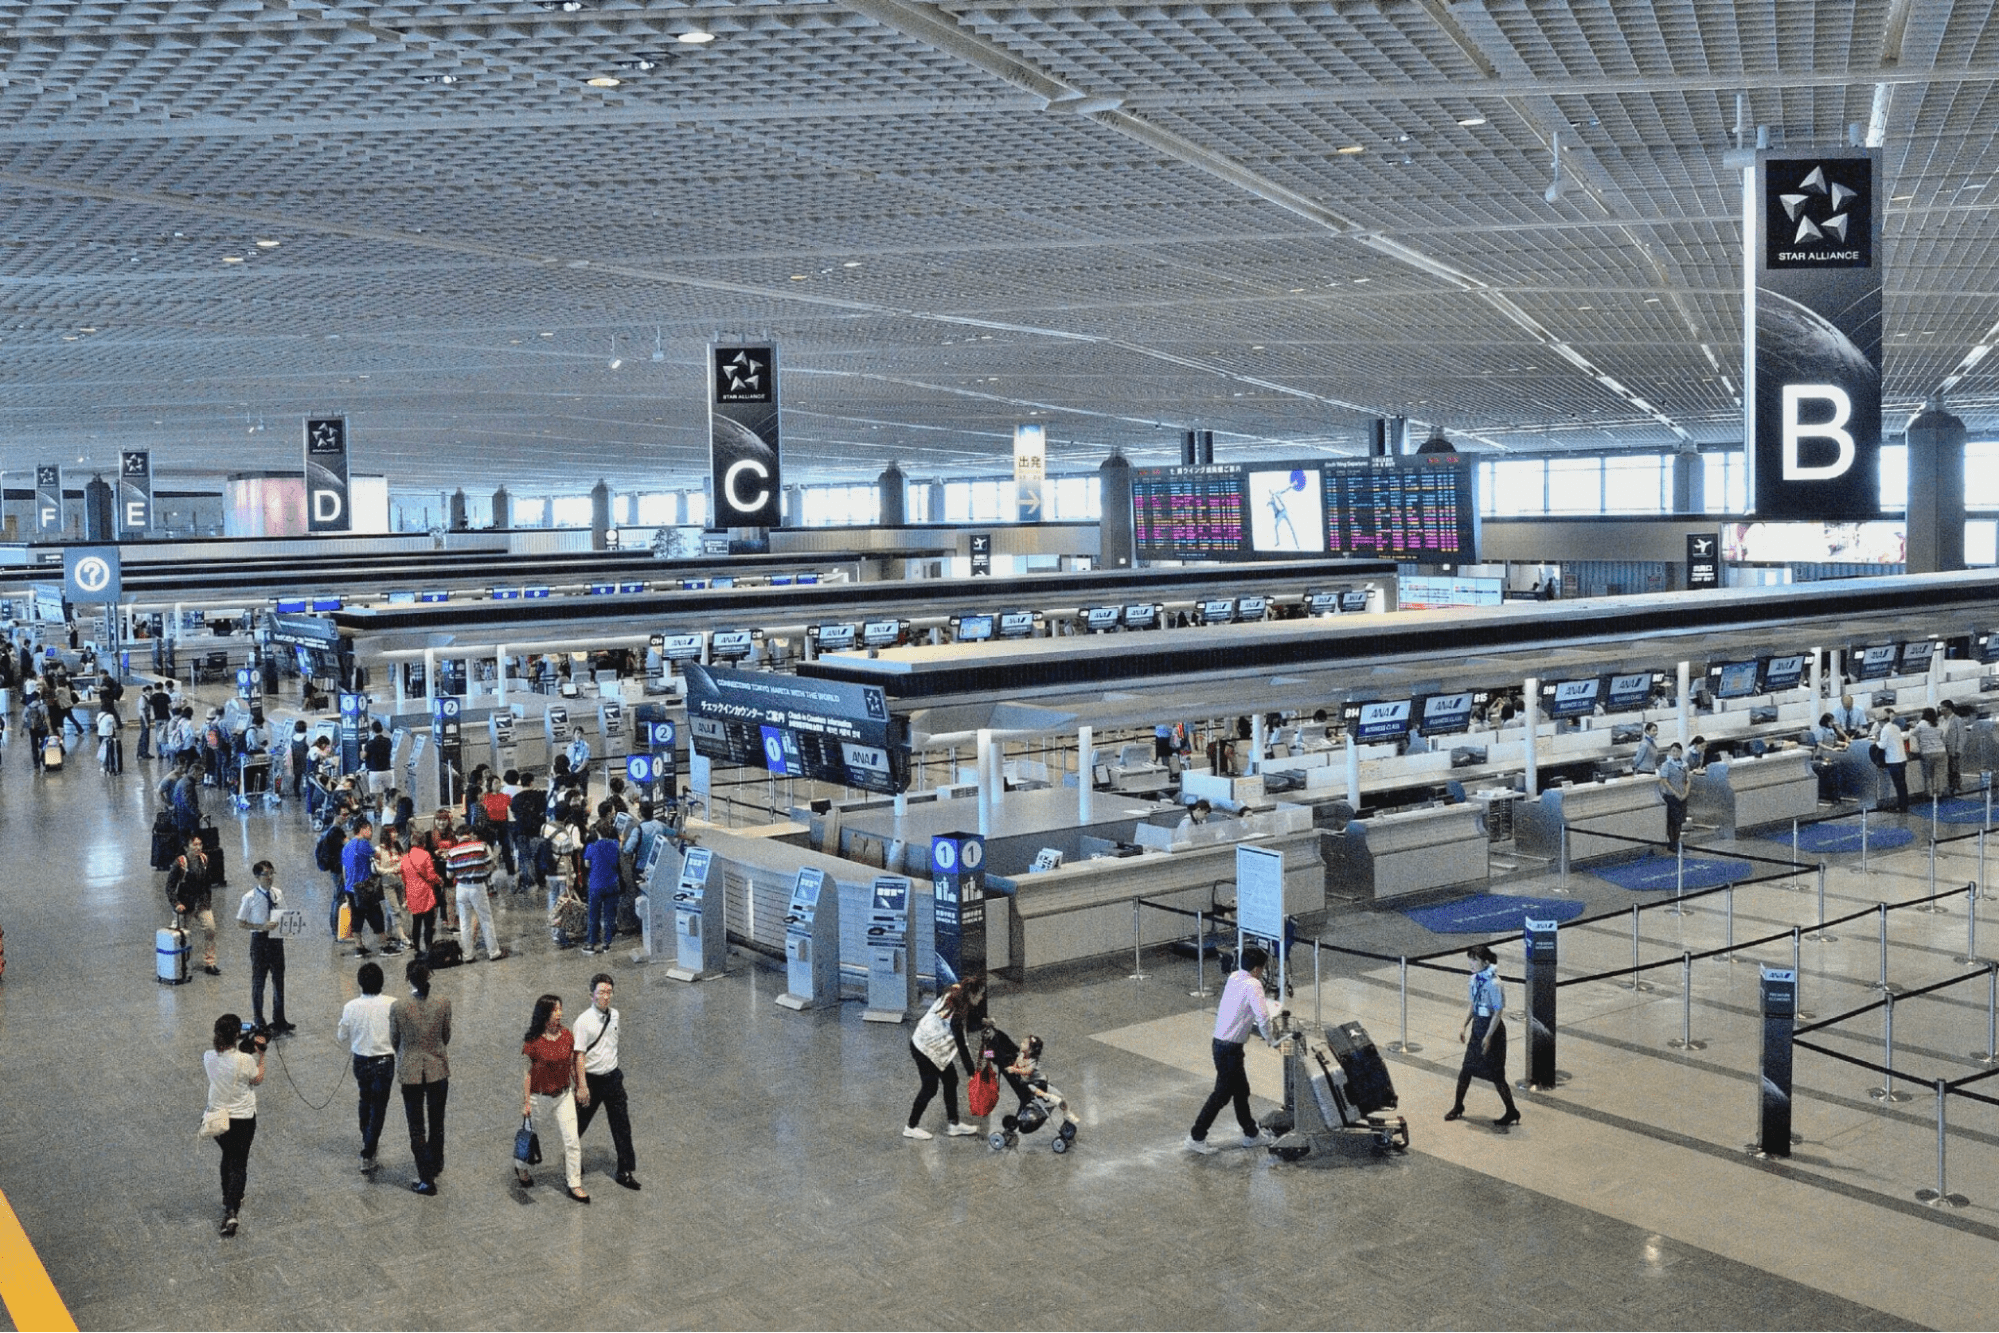 narita airport guide - check in counters